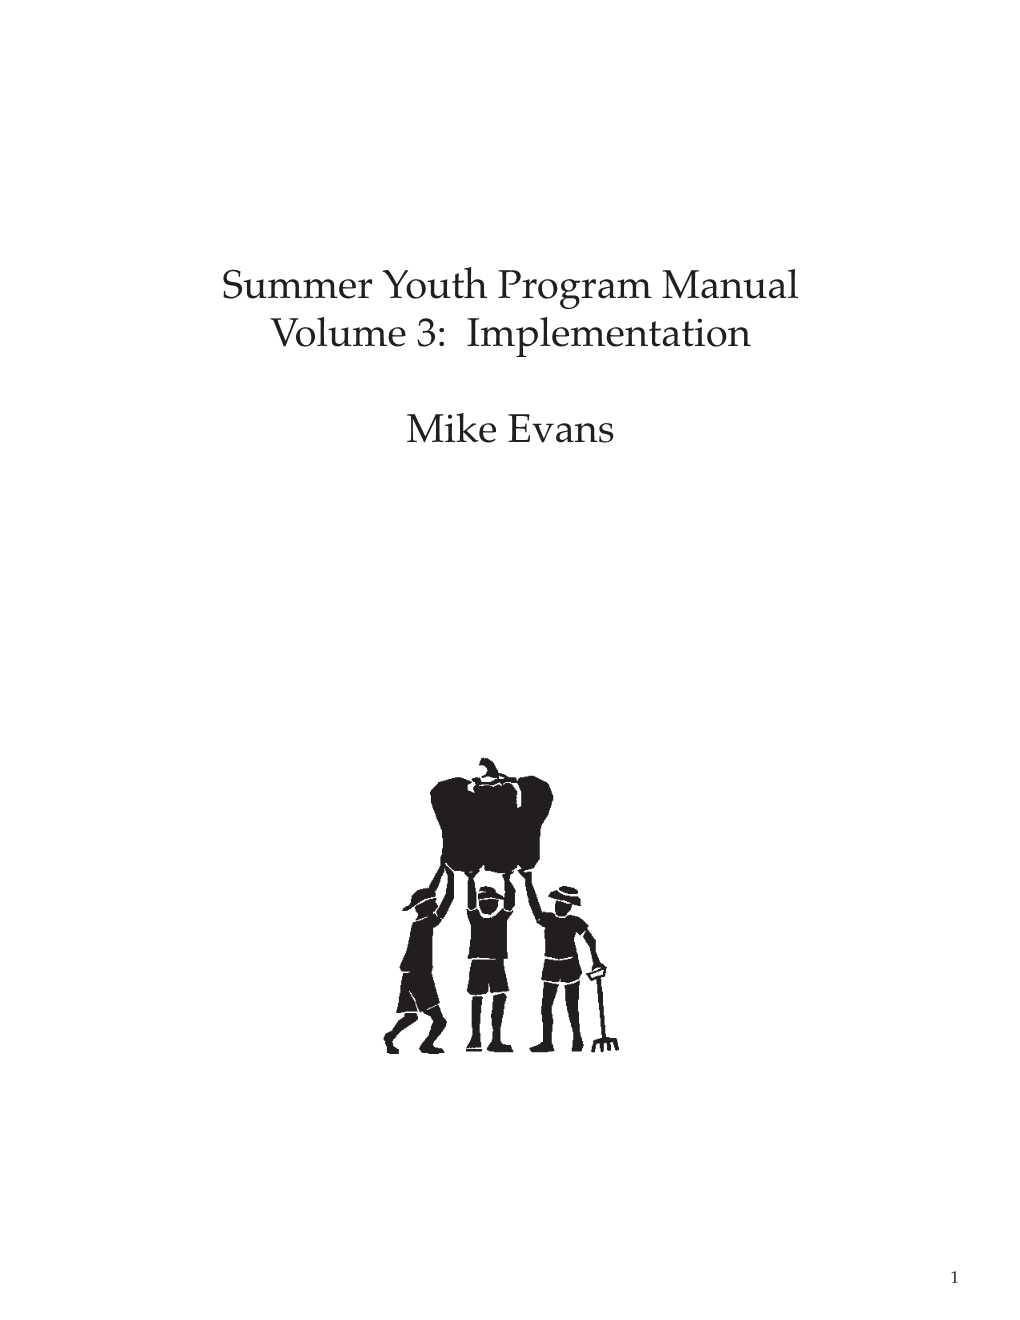 Summer Youth Program Manual Volume 3: Implementation